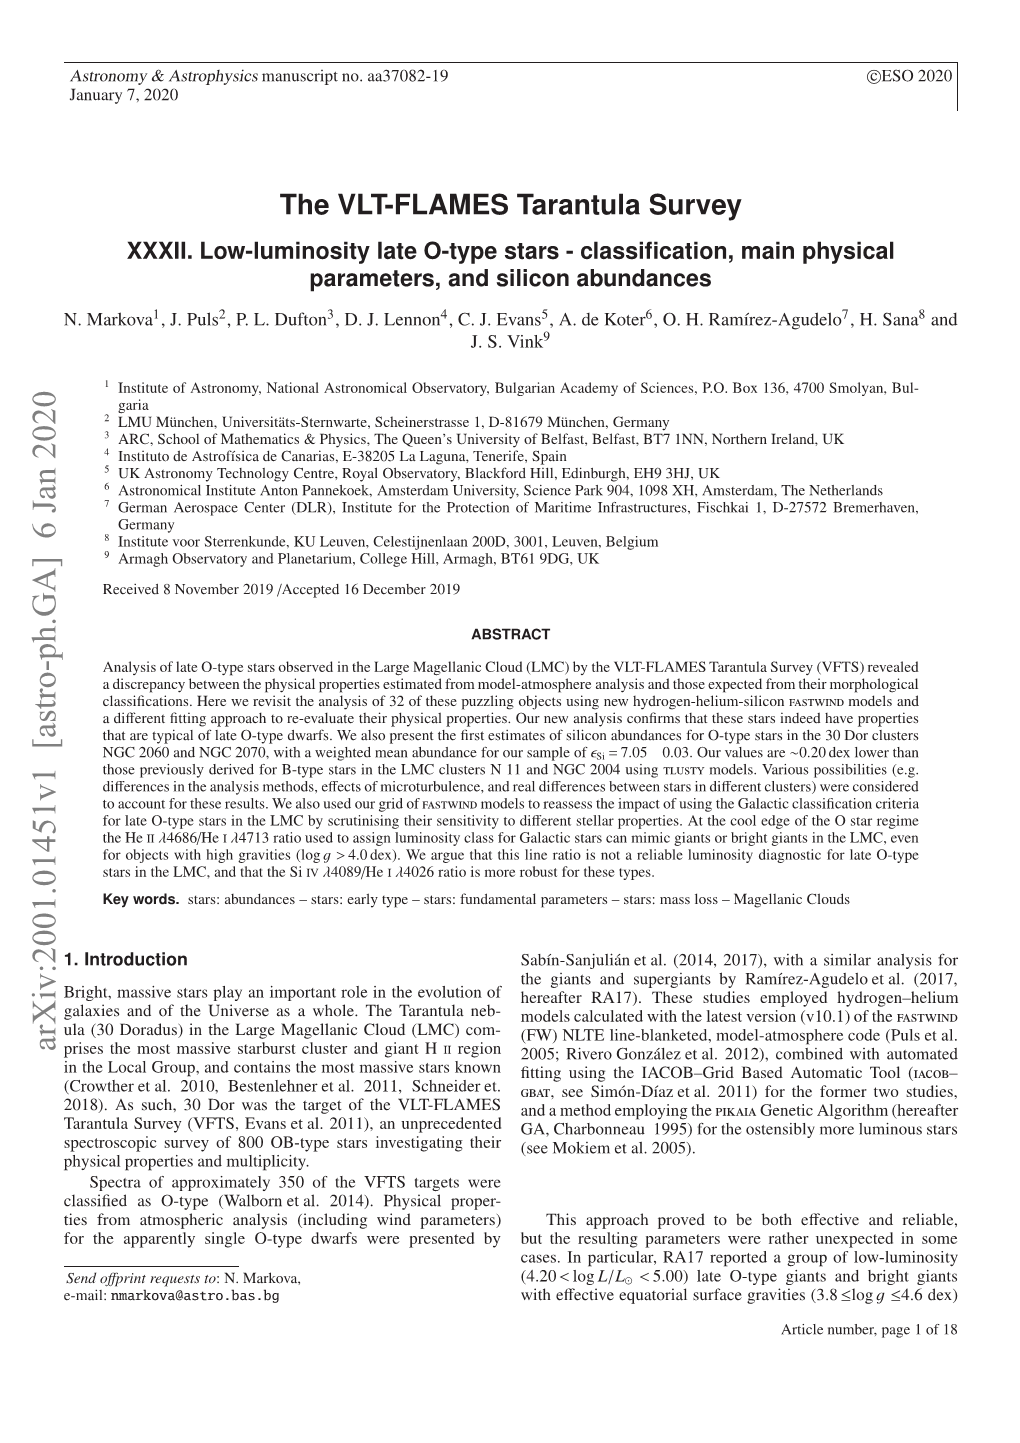 The VLT-FLAMES Tarantula Survey XXXII. Low-Luminosity Late O-Type Stars--Classification, Main Physical Parameters, and Silicon Abundances